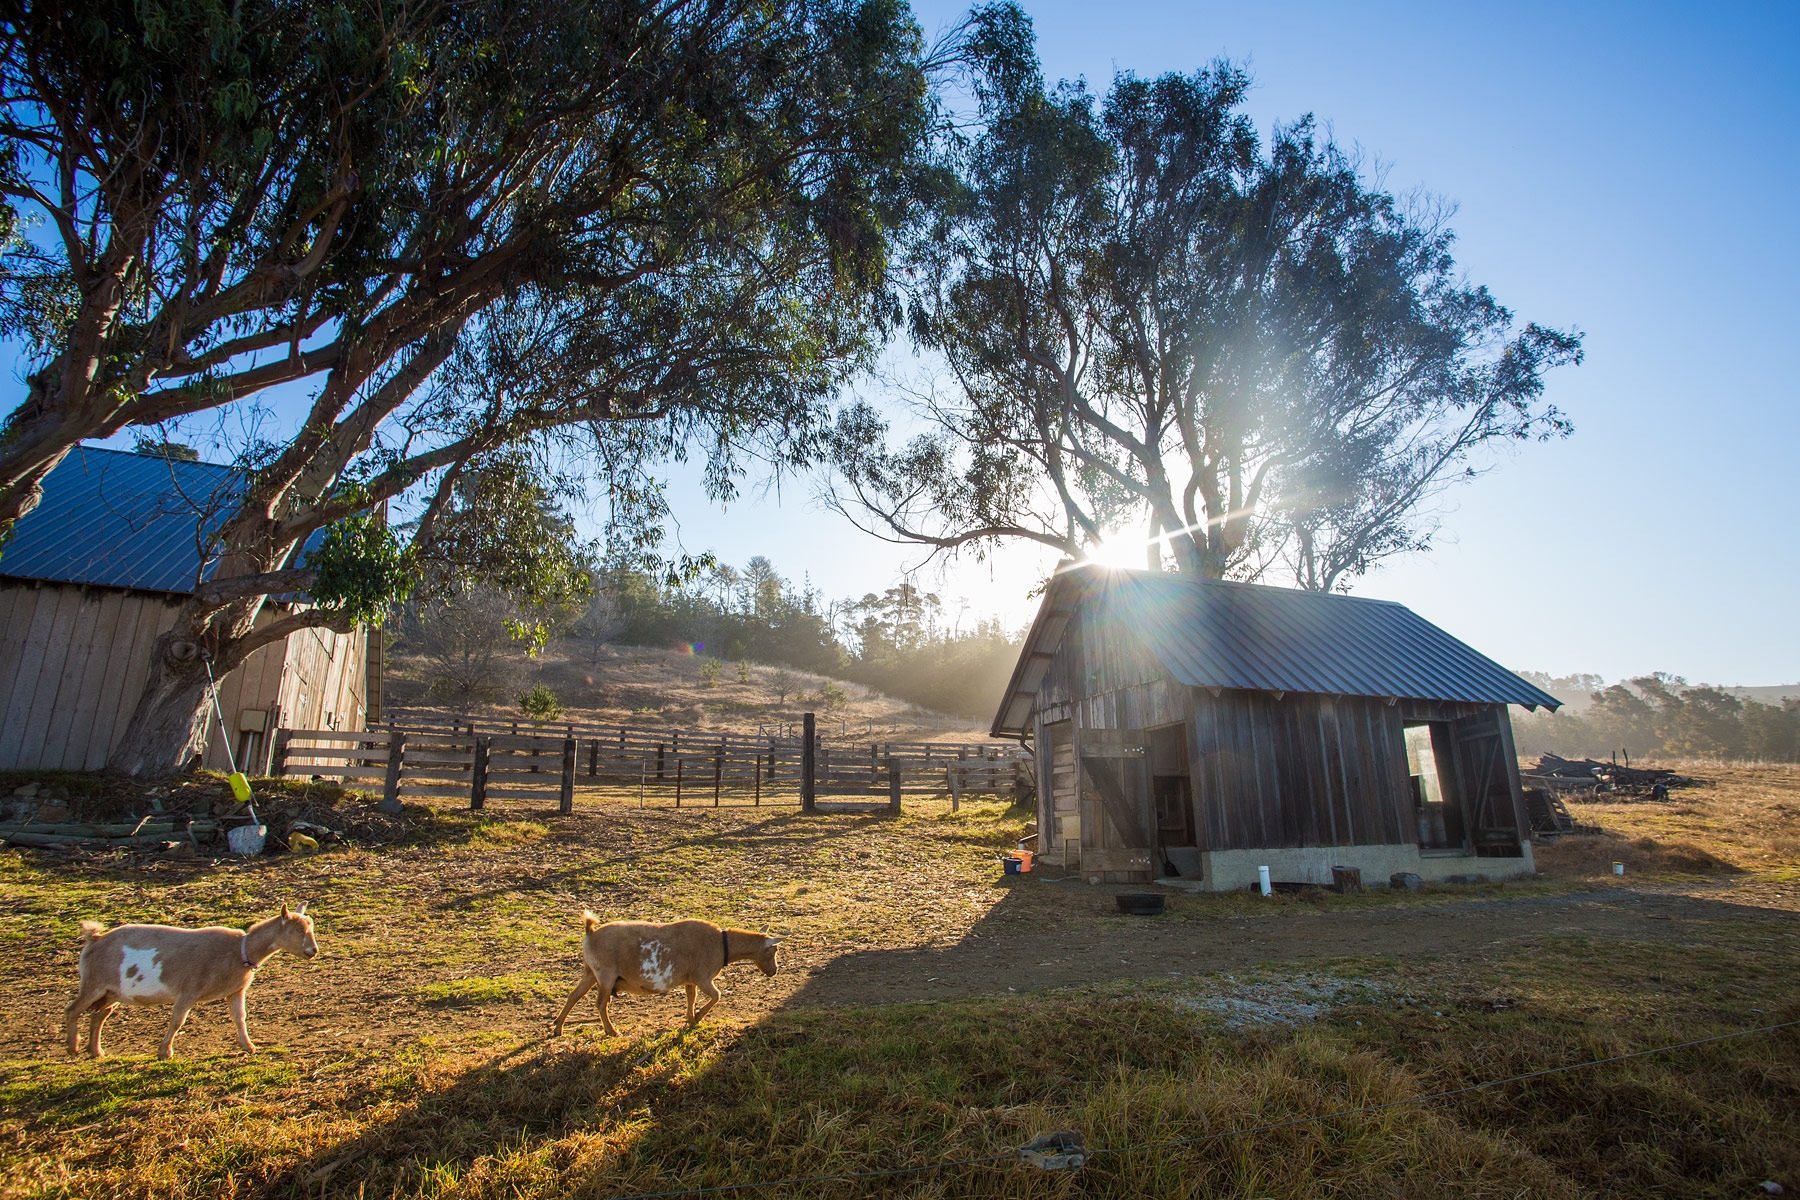 The Canestros keep several goats and horses near their home at Rancho Marino.